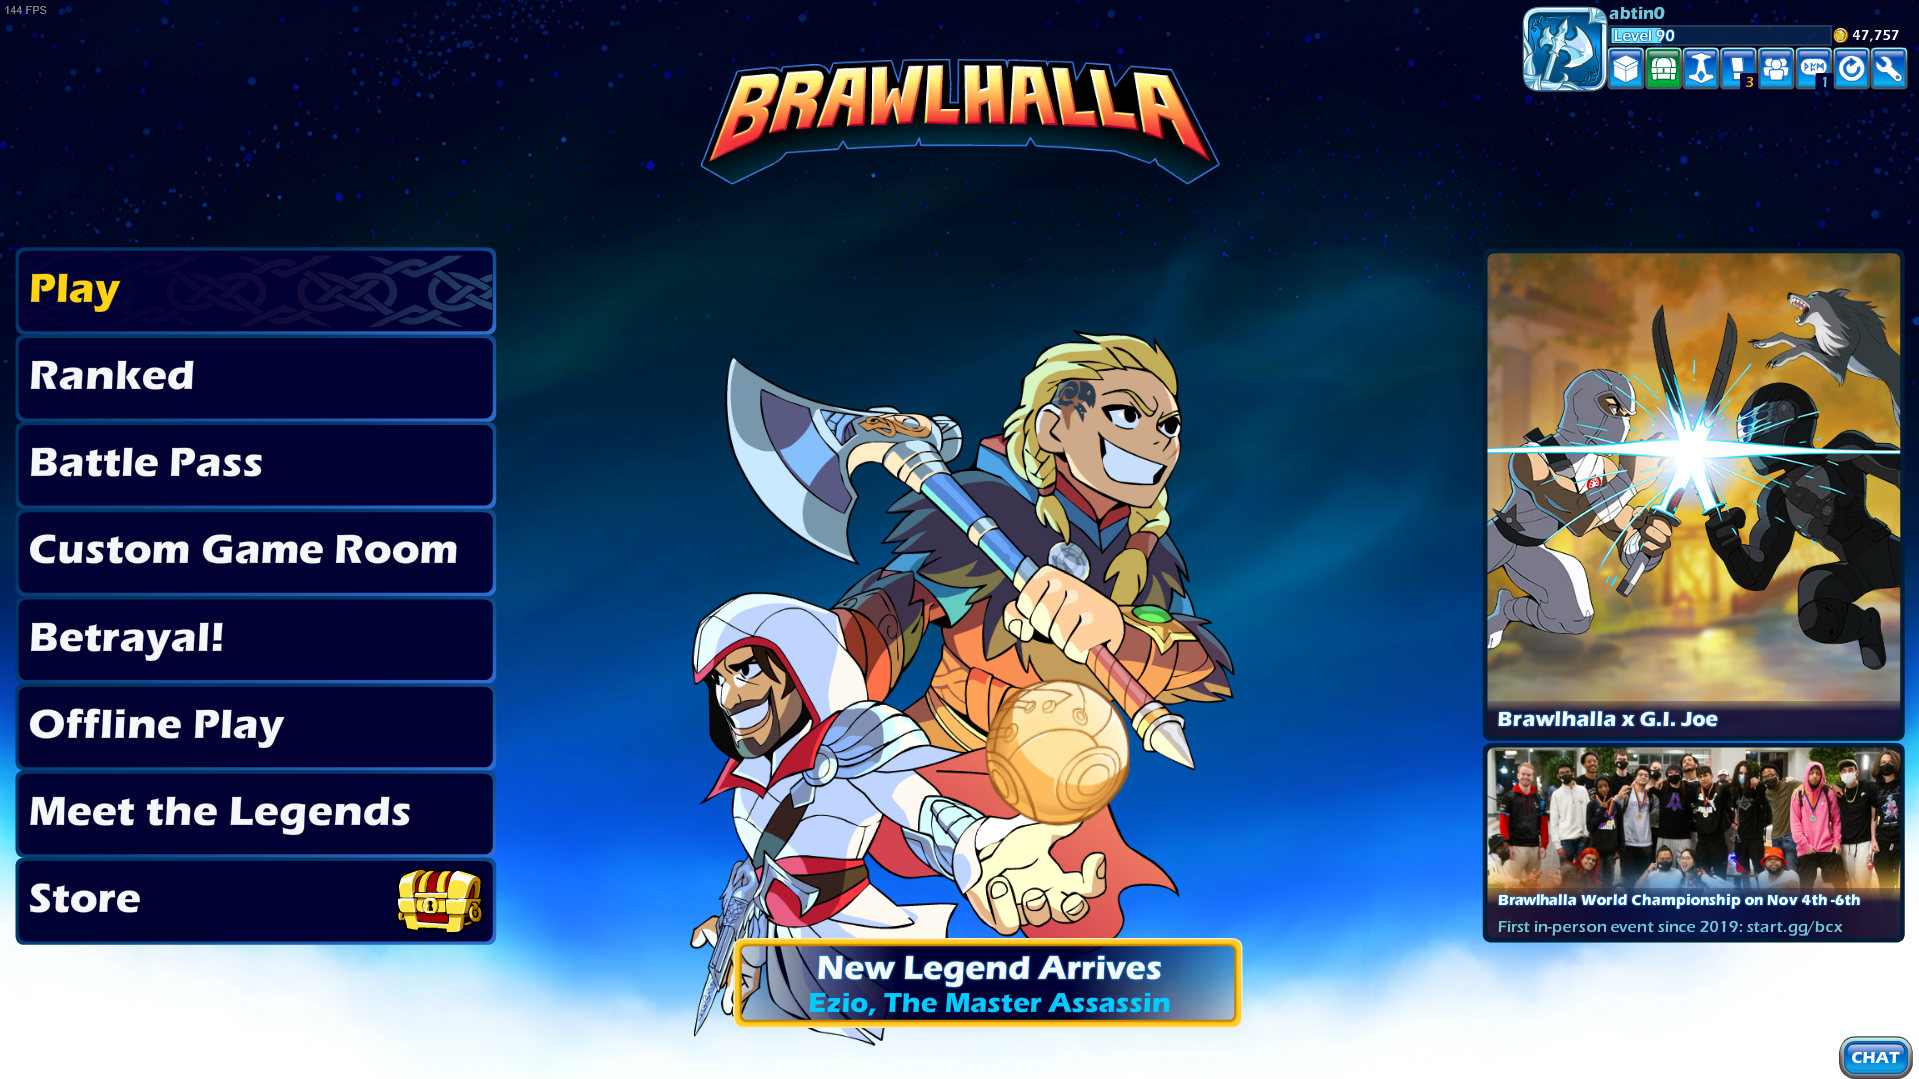 Brawlhalla home page